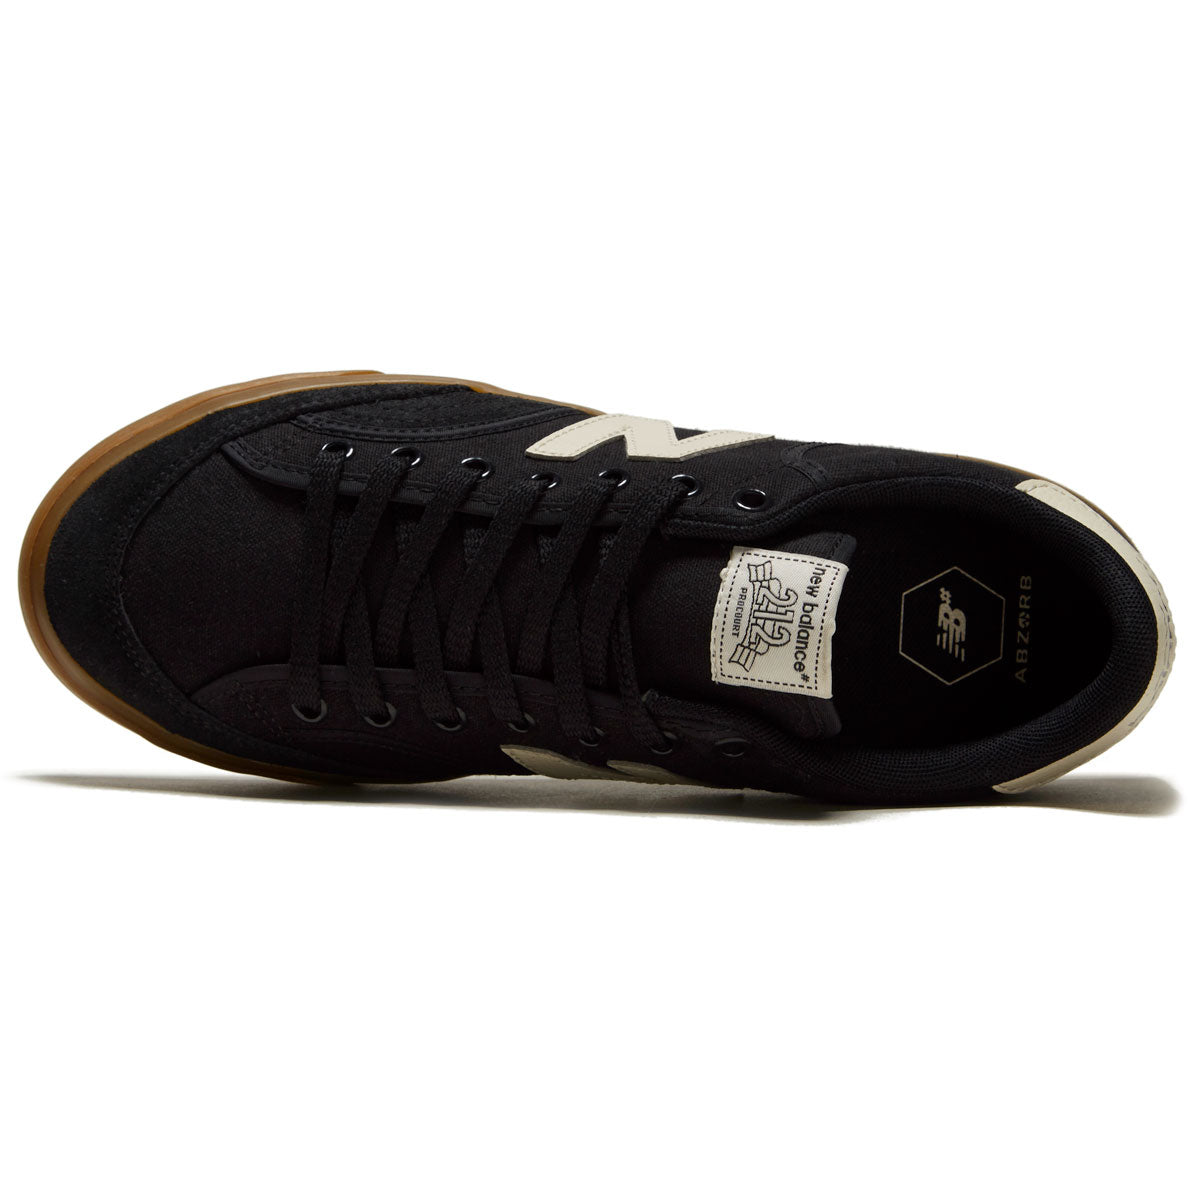 New Balance 212 Shoes - Black/Gum image 3